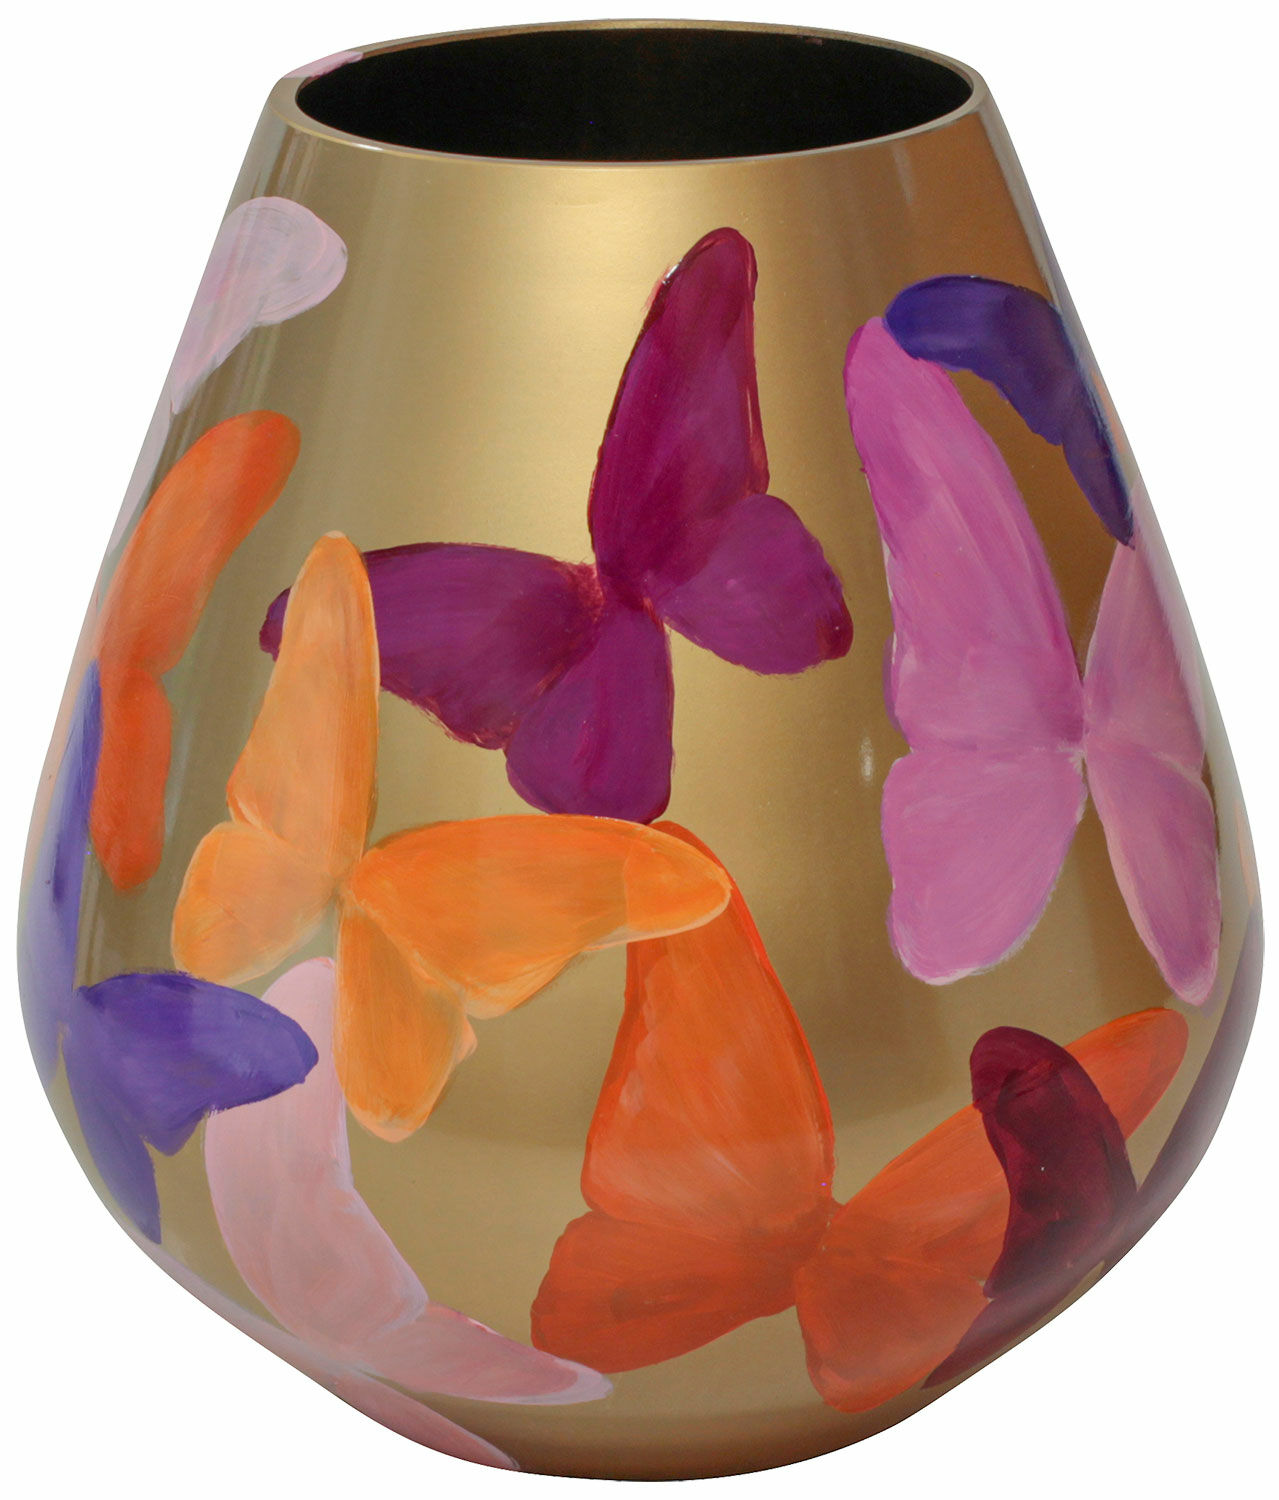 Glass vase "Butterfly" by Milou van Schaik Martinet